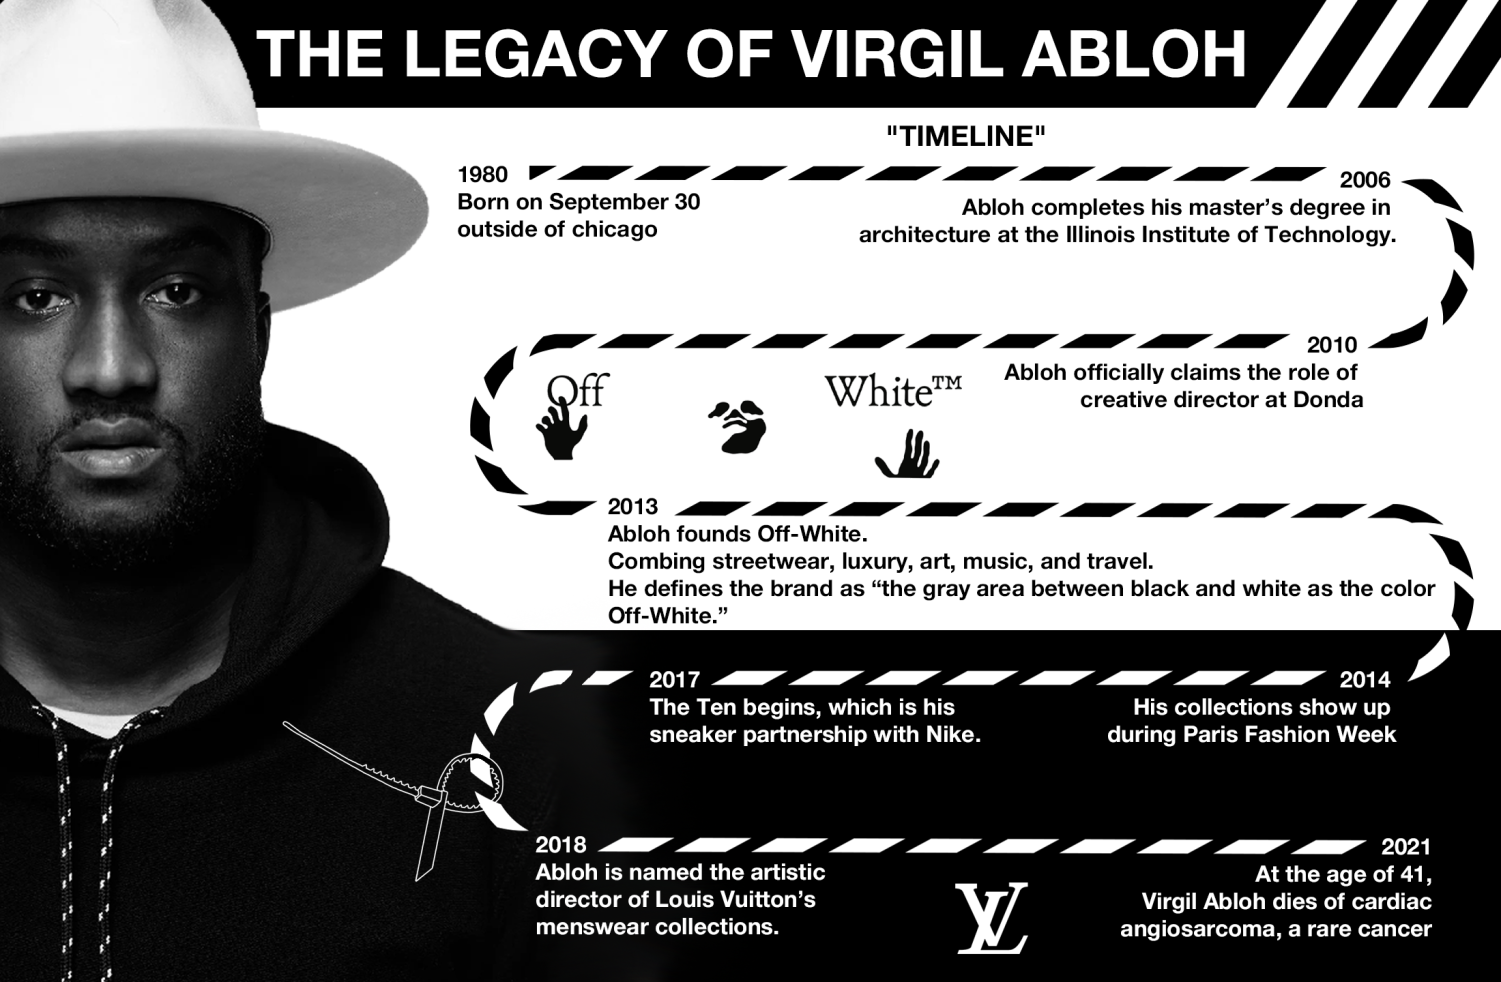 What Is Virgil Abloh's Legacy?